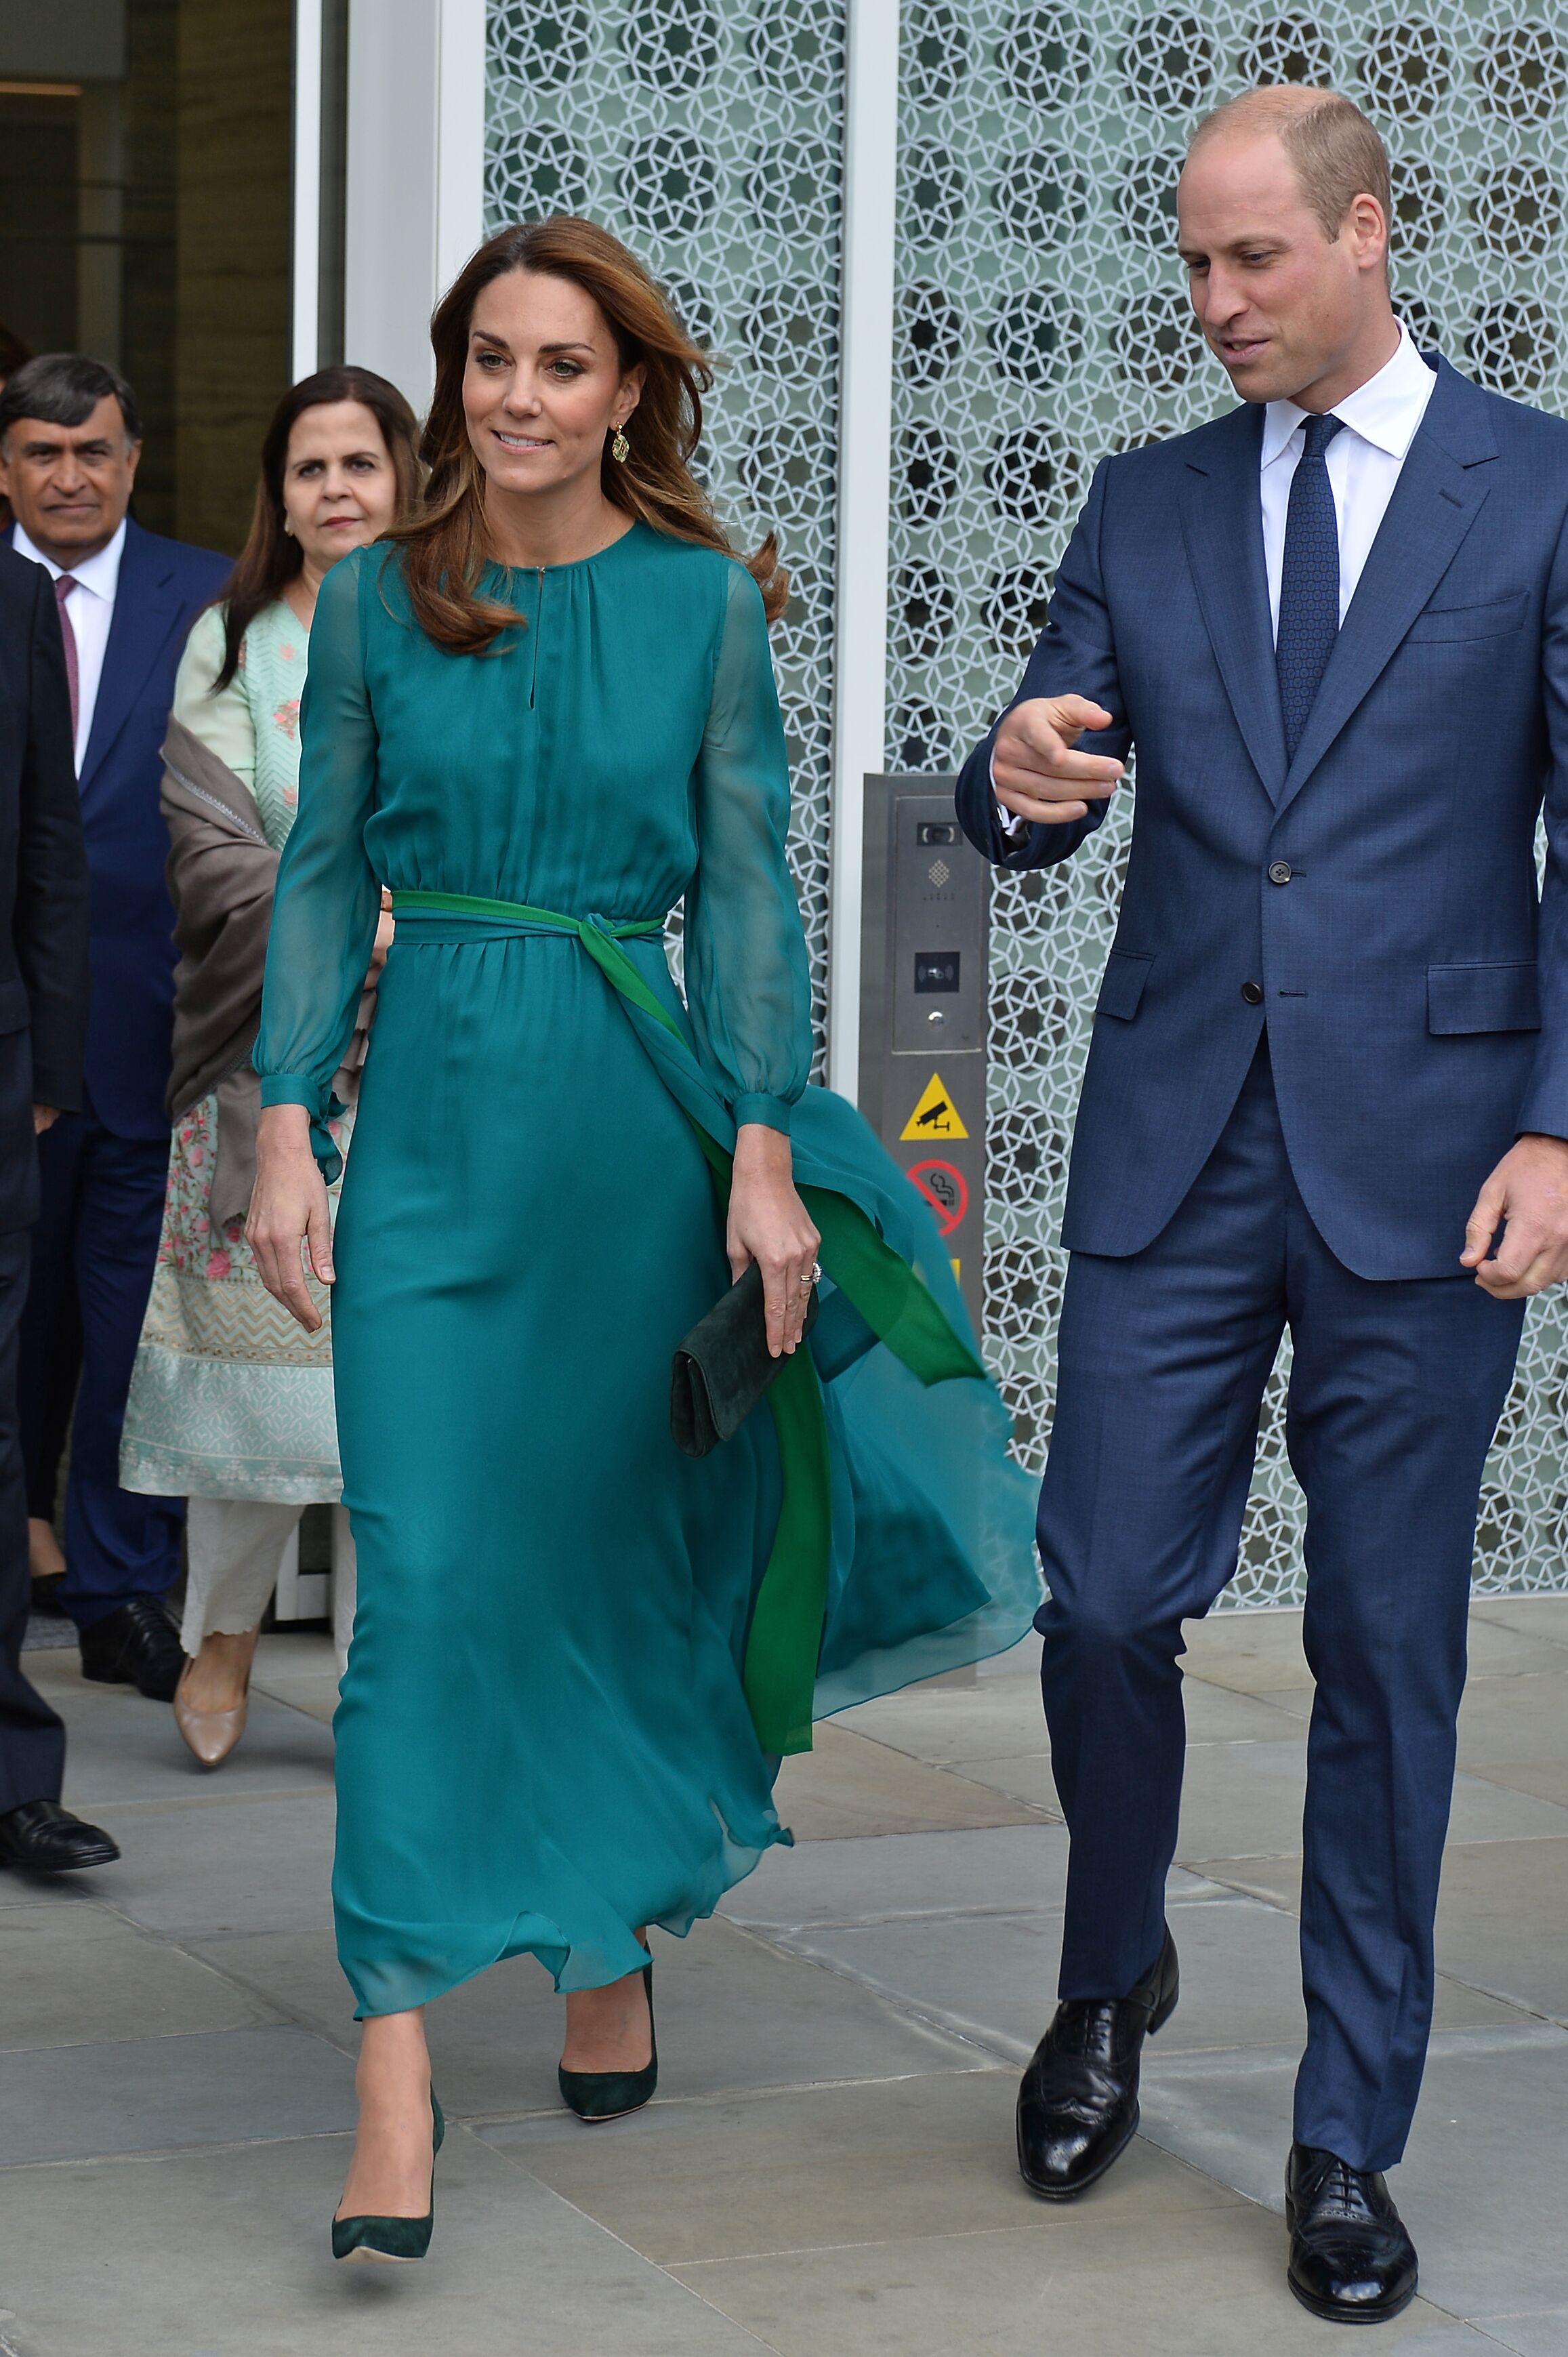 Le Prince William et Kate Middleton visitent le Centre Aga Khan. | Source : Getty Images